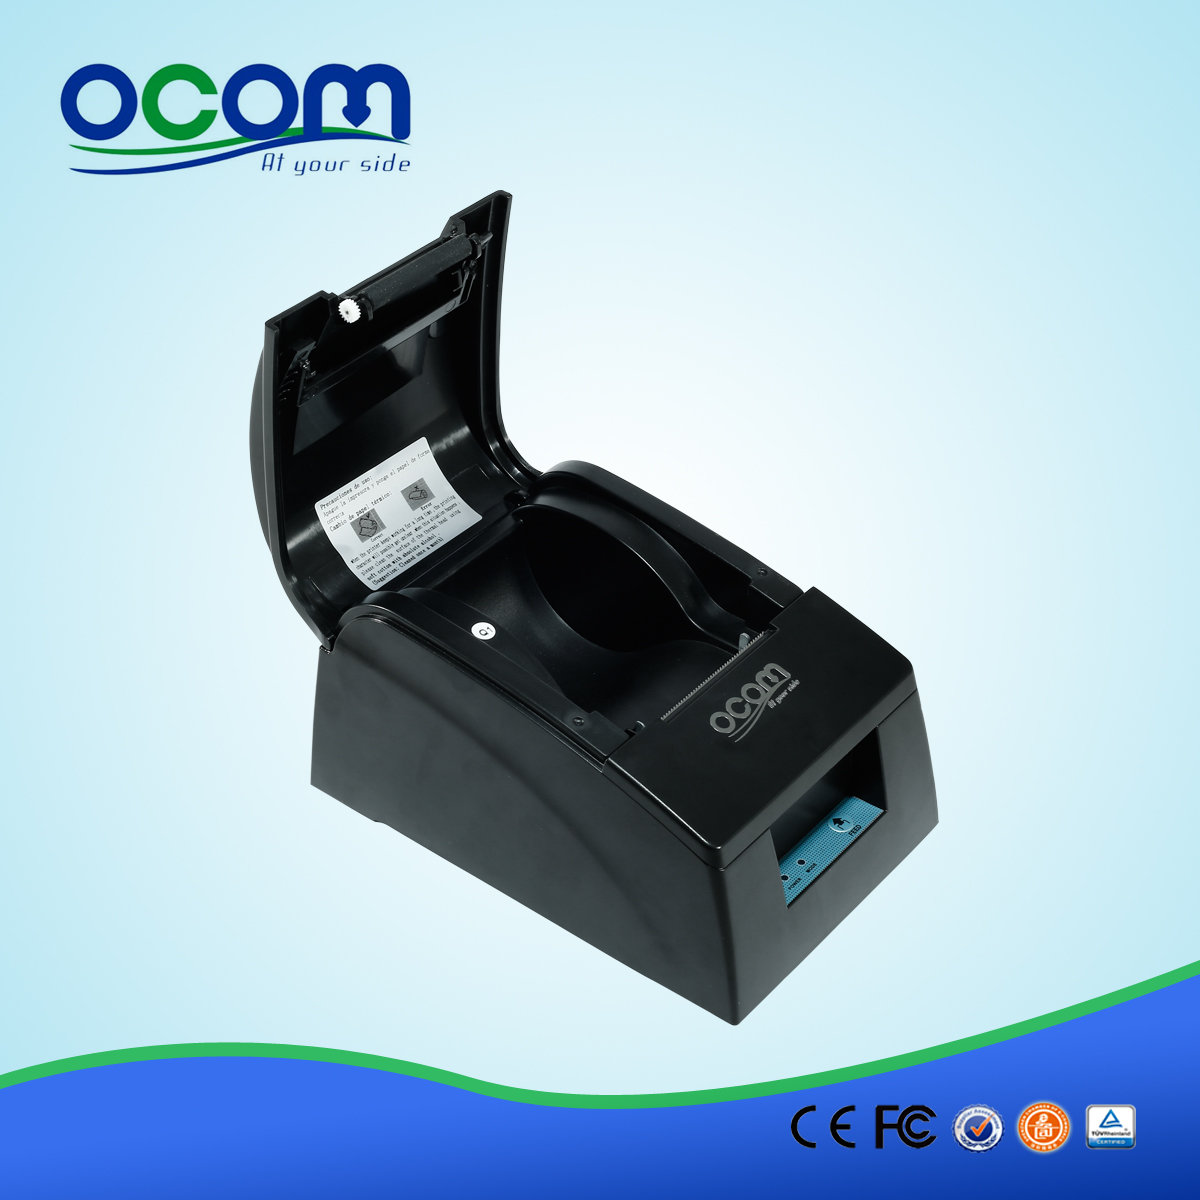 Chine Pos Thermal Receipt Printer OCPP-585